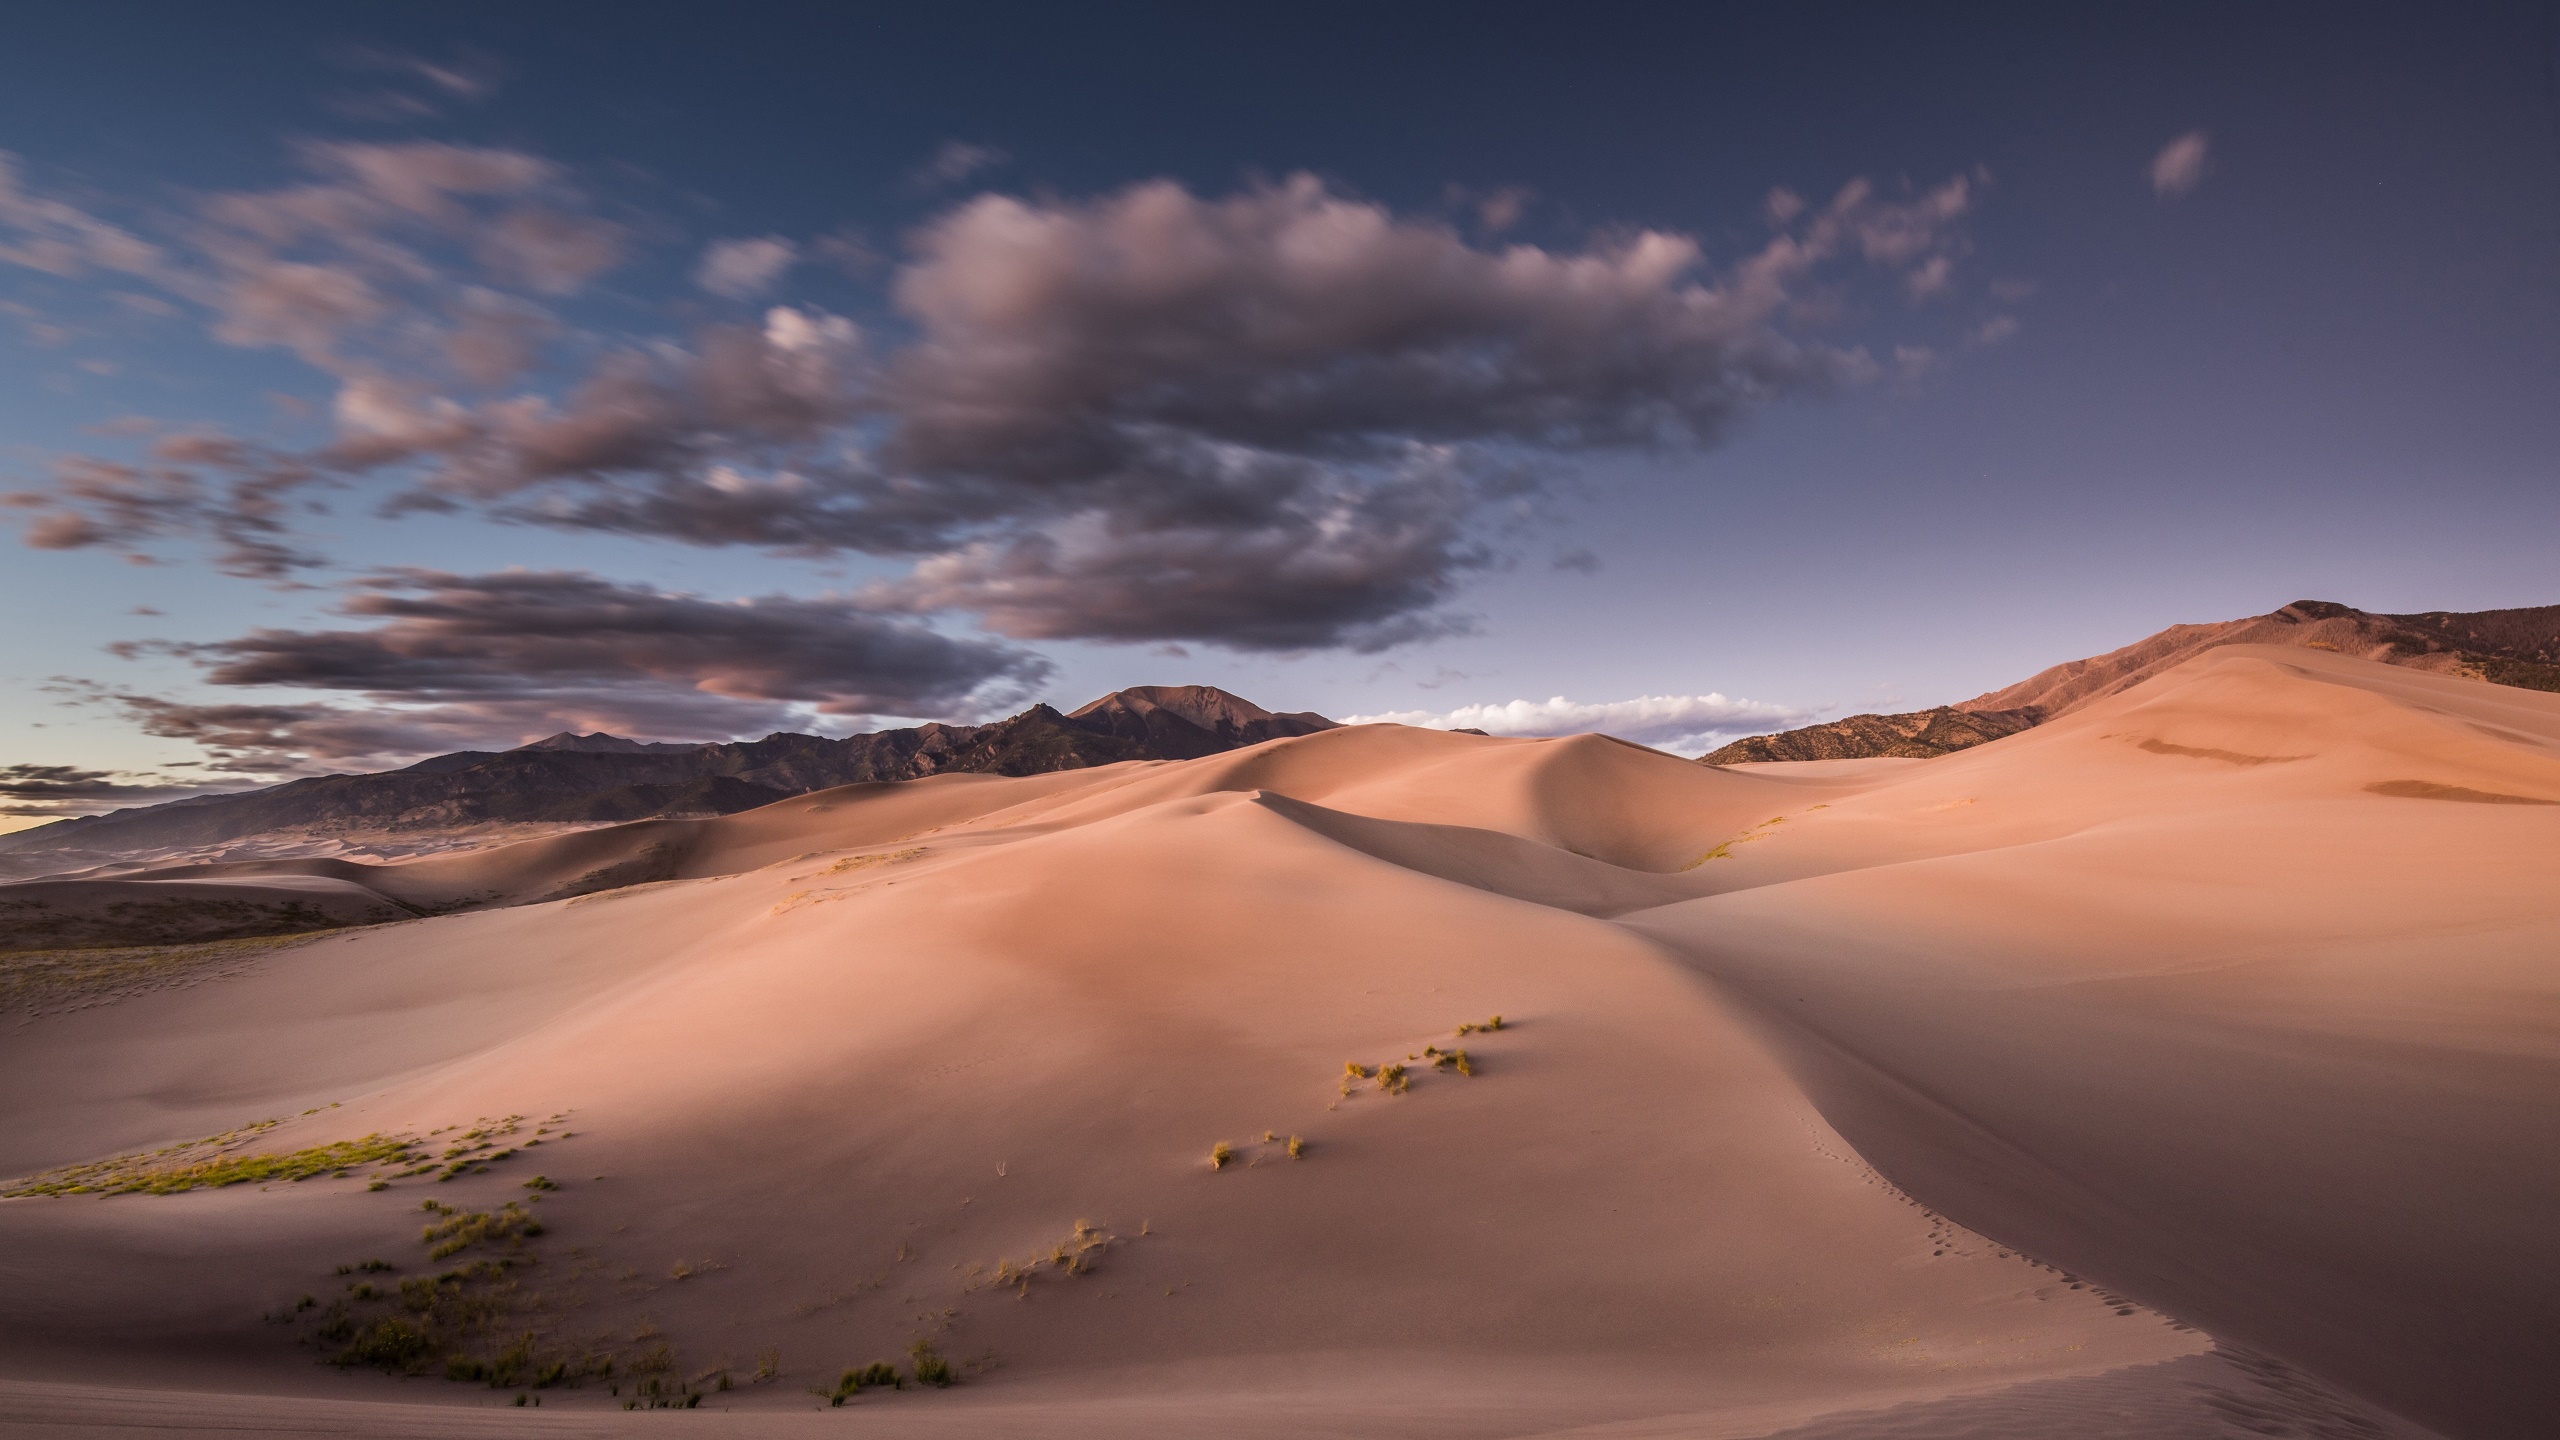 General 2560x1440 desert nature sand landscape